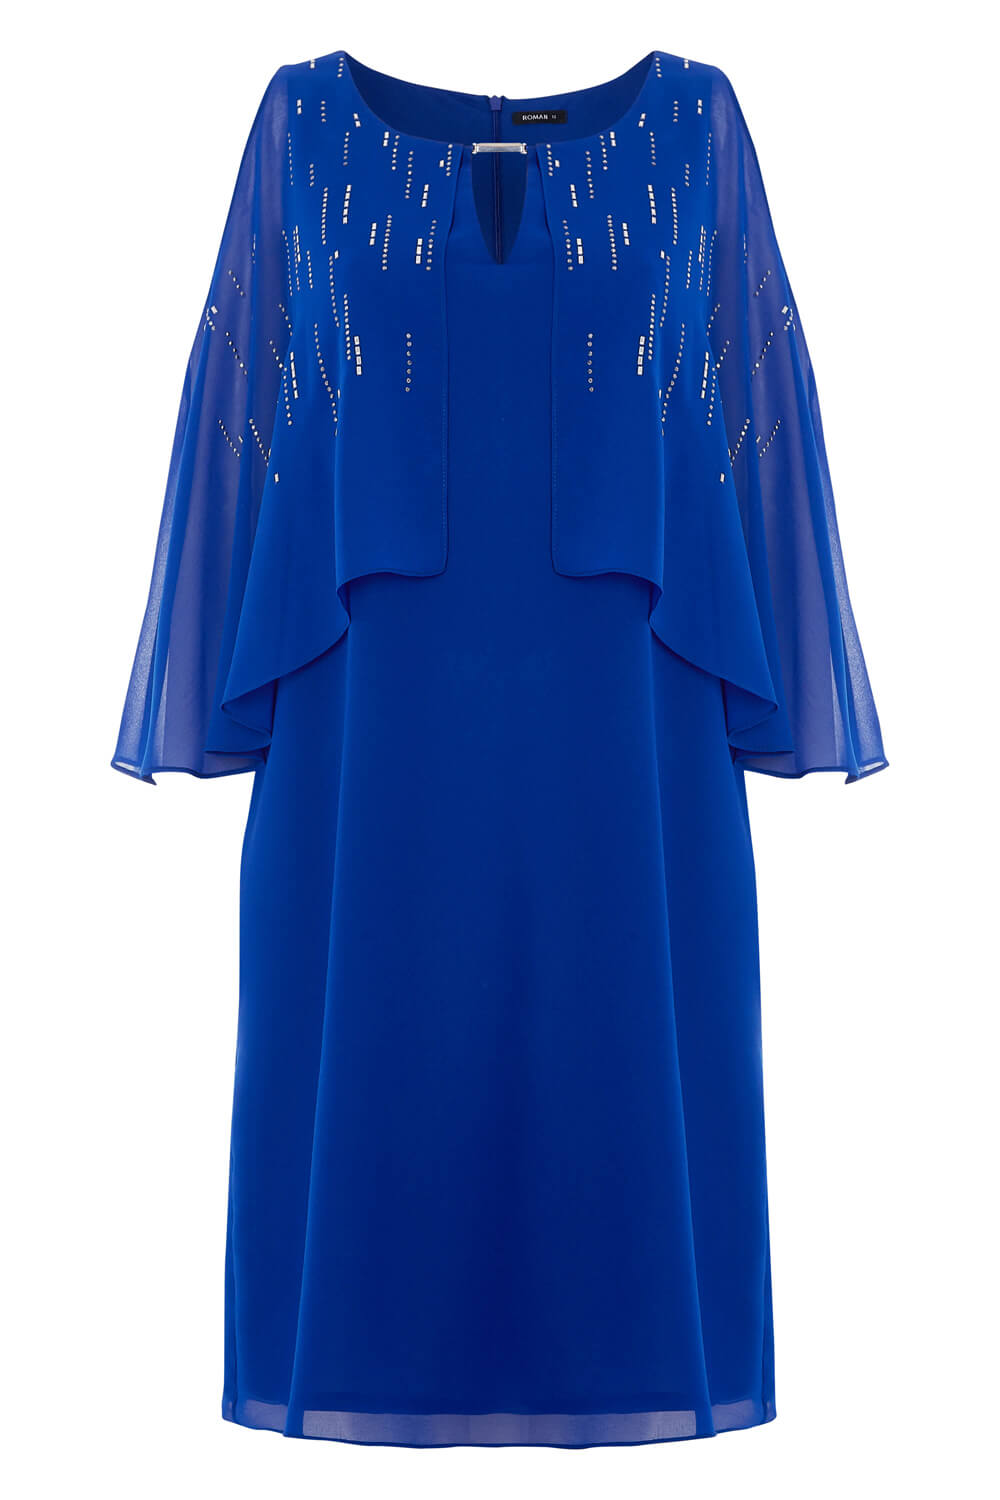 Royal Blue Sparkle Chiffon Overlay Dress, Image 5 of 5